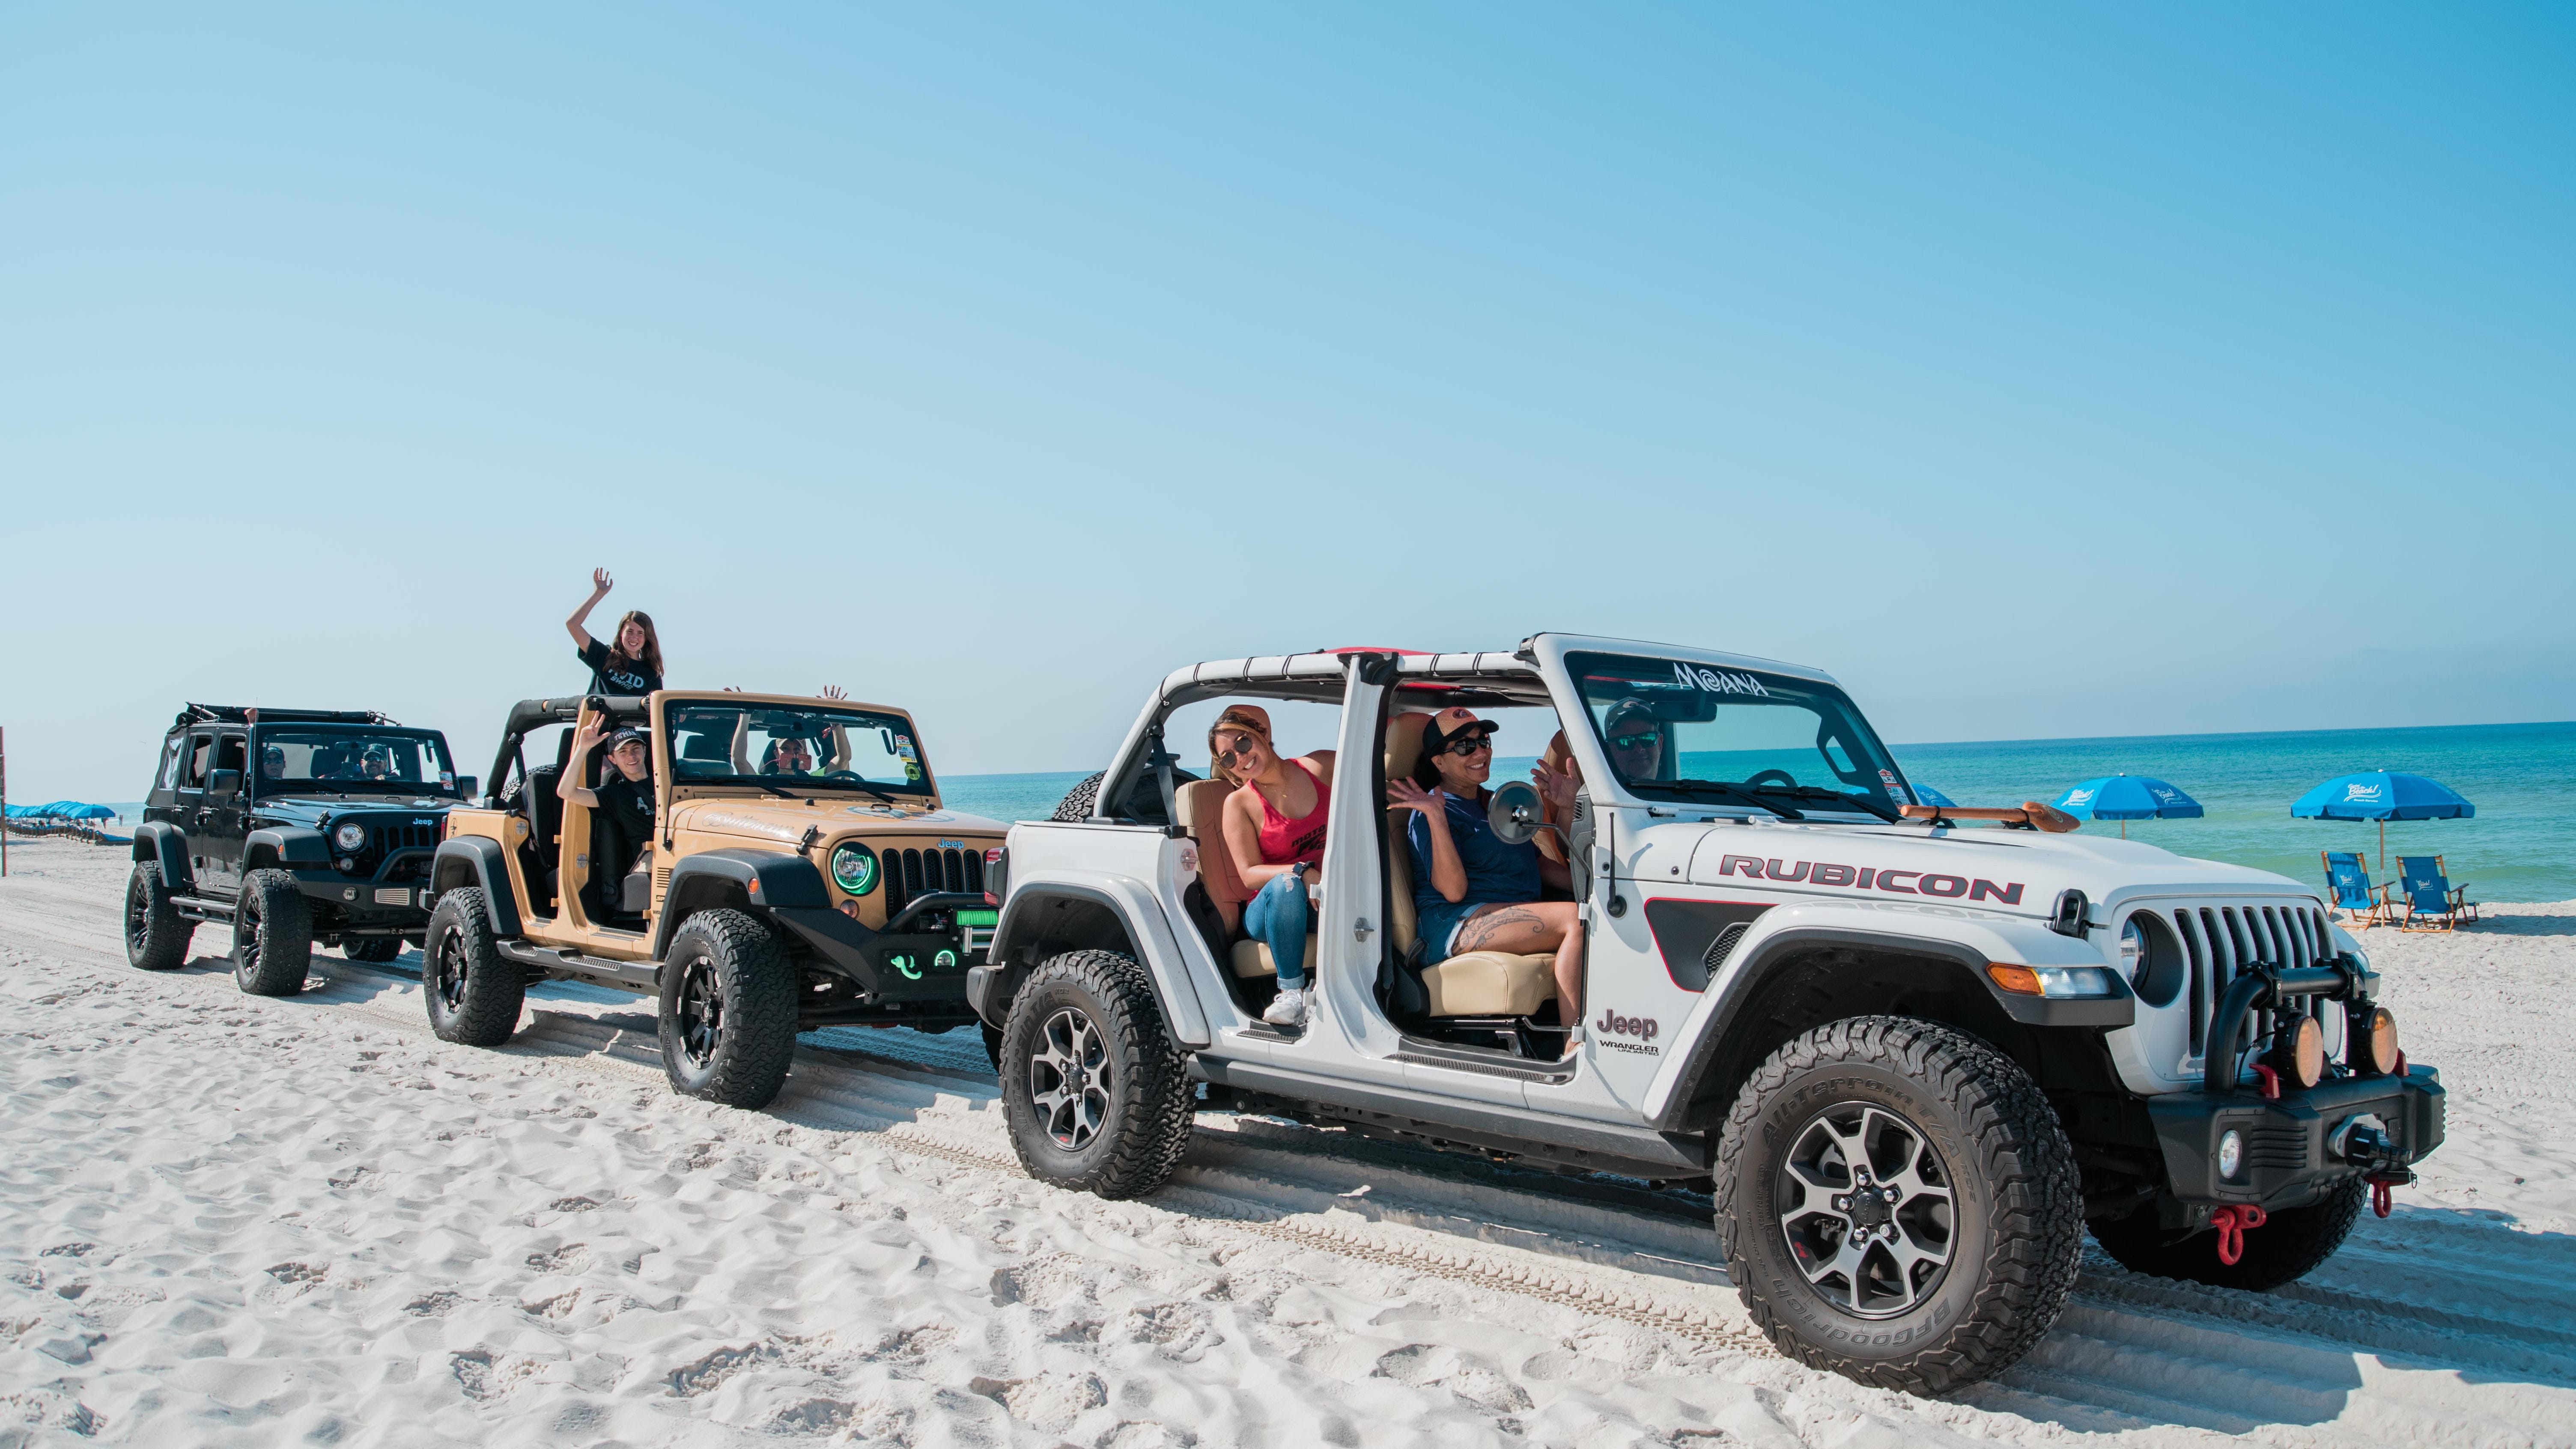 Cruise the beach at Florida Jeep Jam